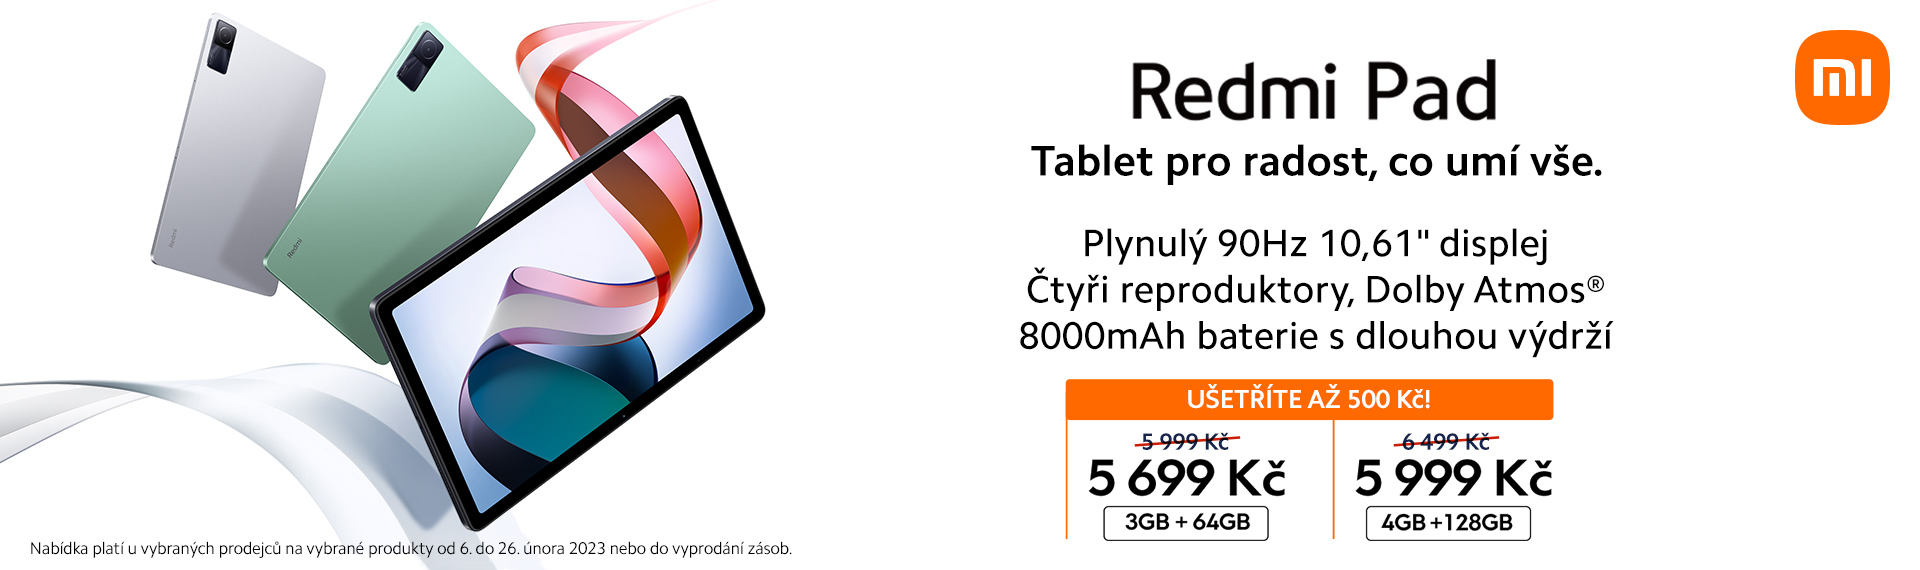 Redmi Pad - tablet pro radost